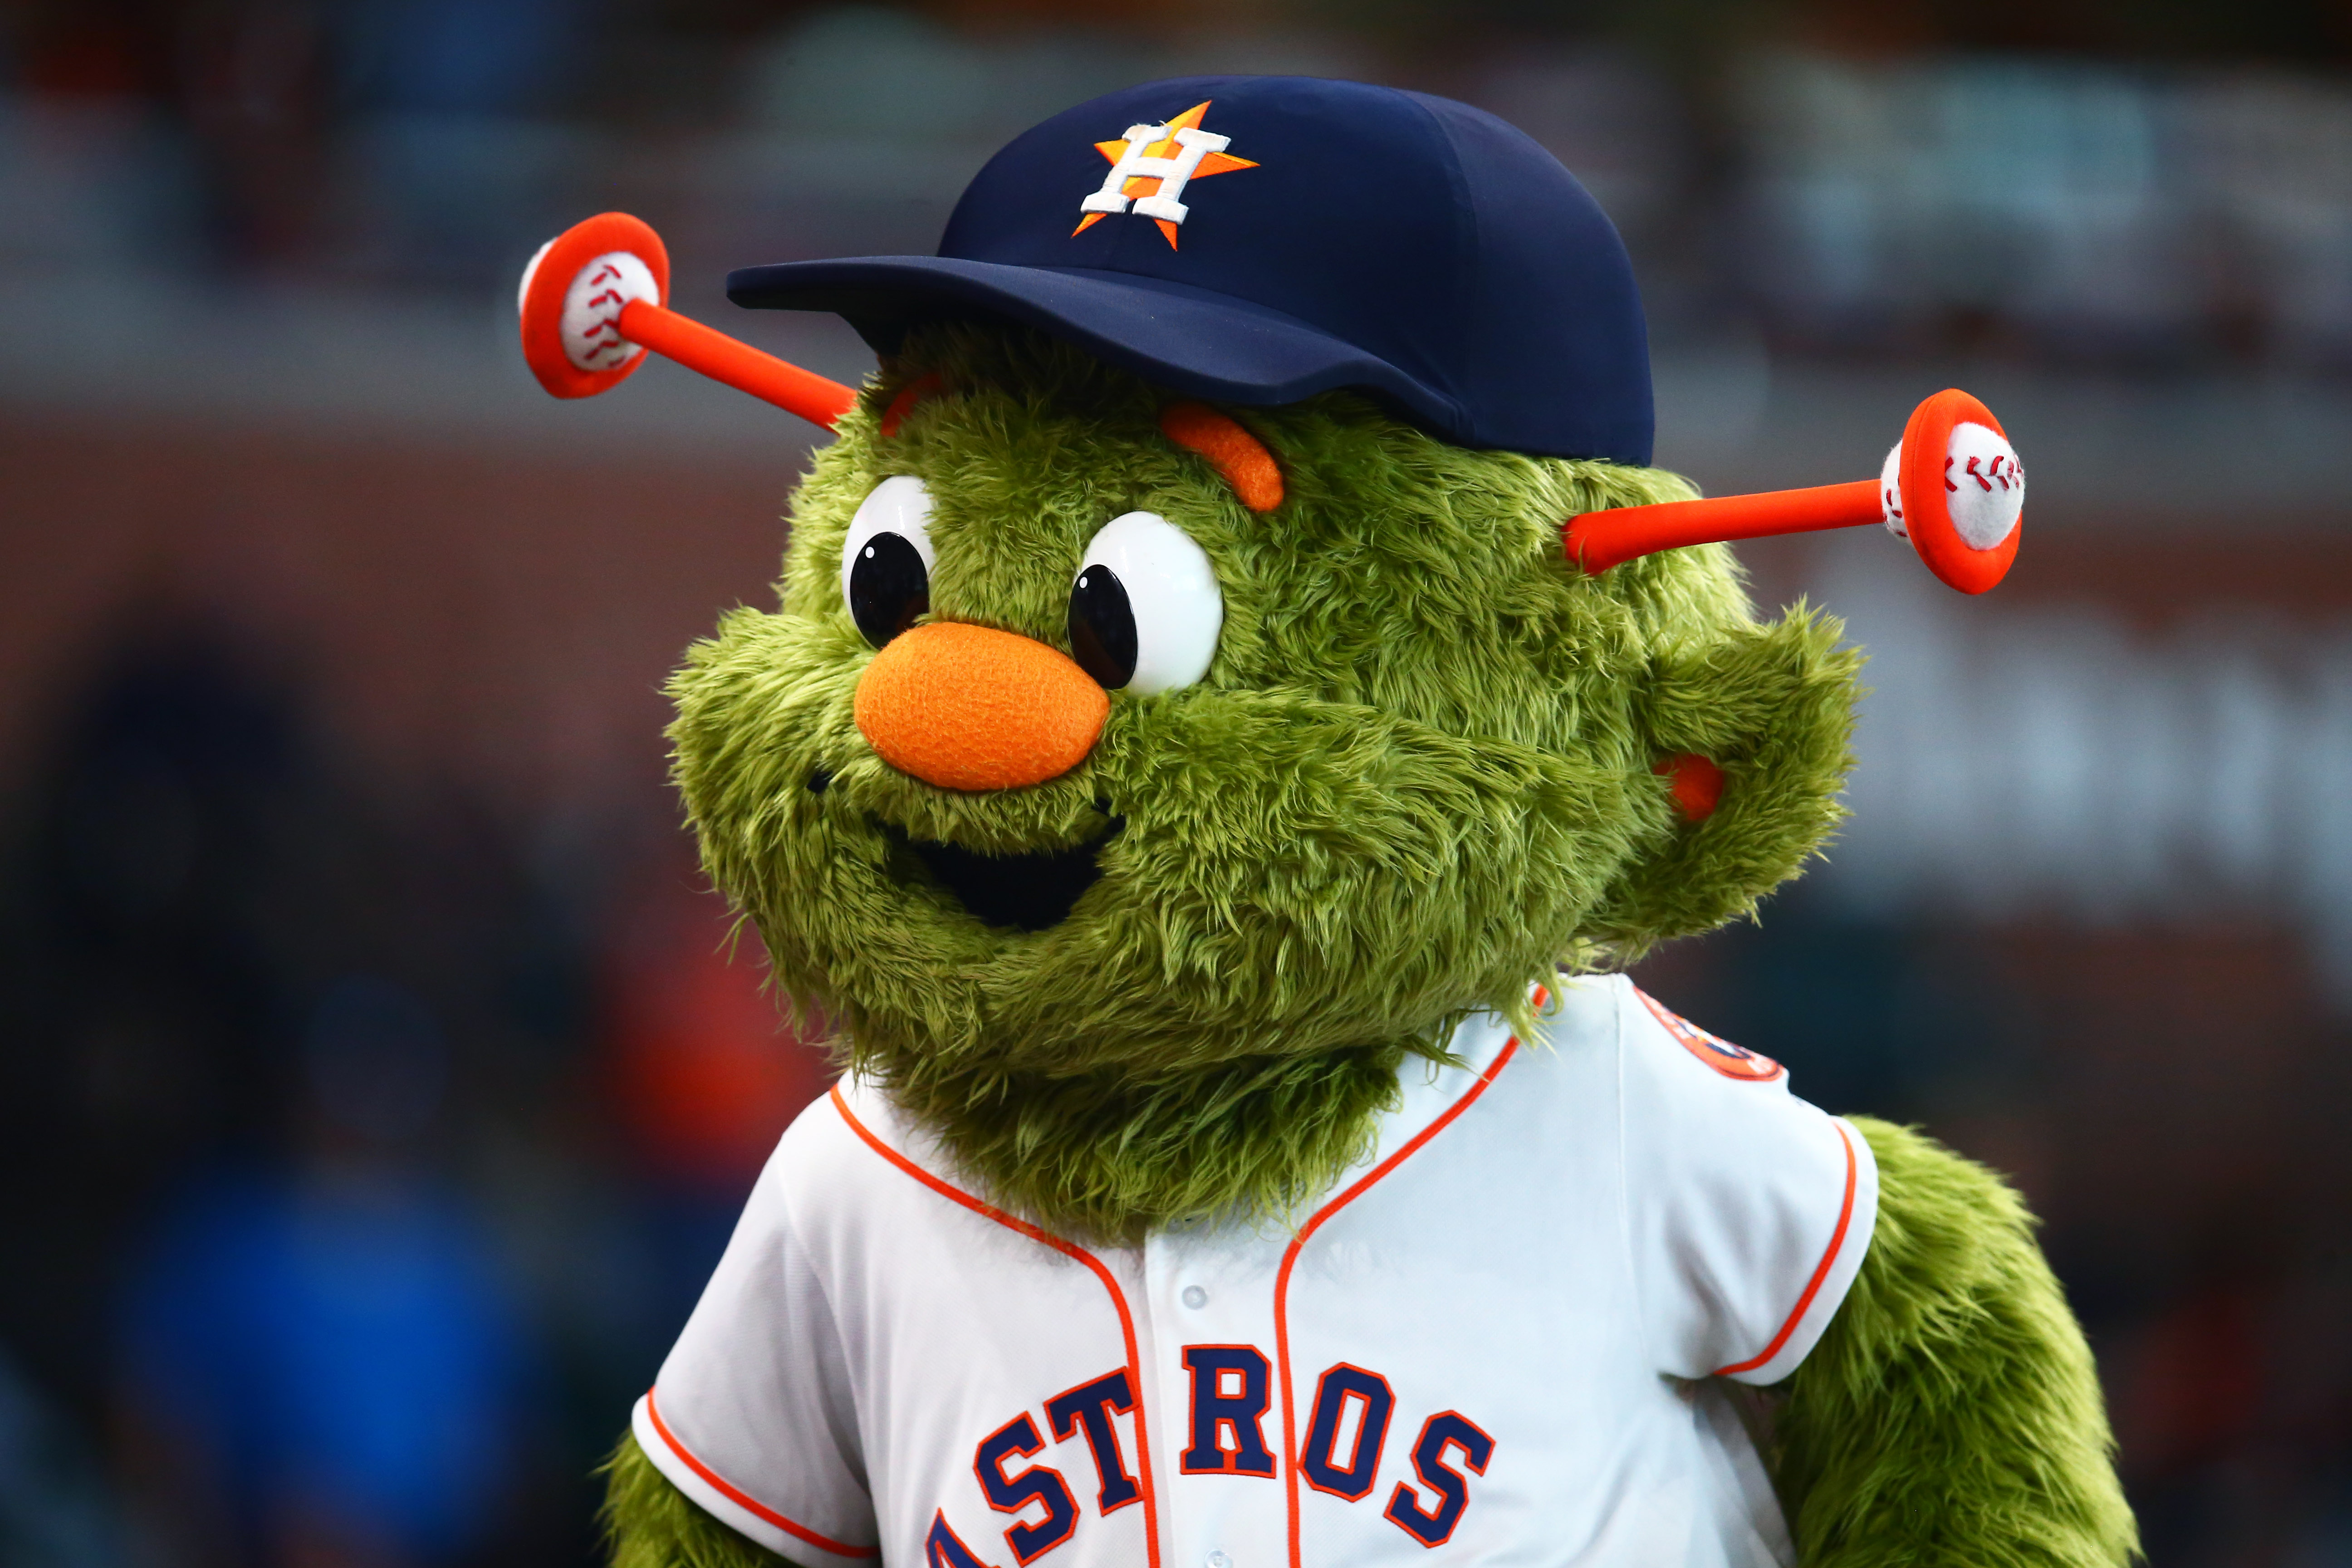 Astros Orbit Baseball Mascot